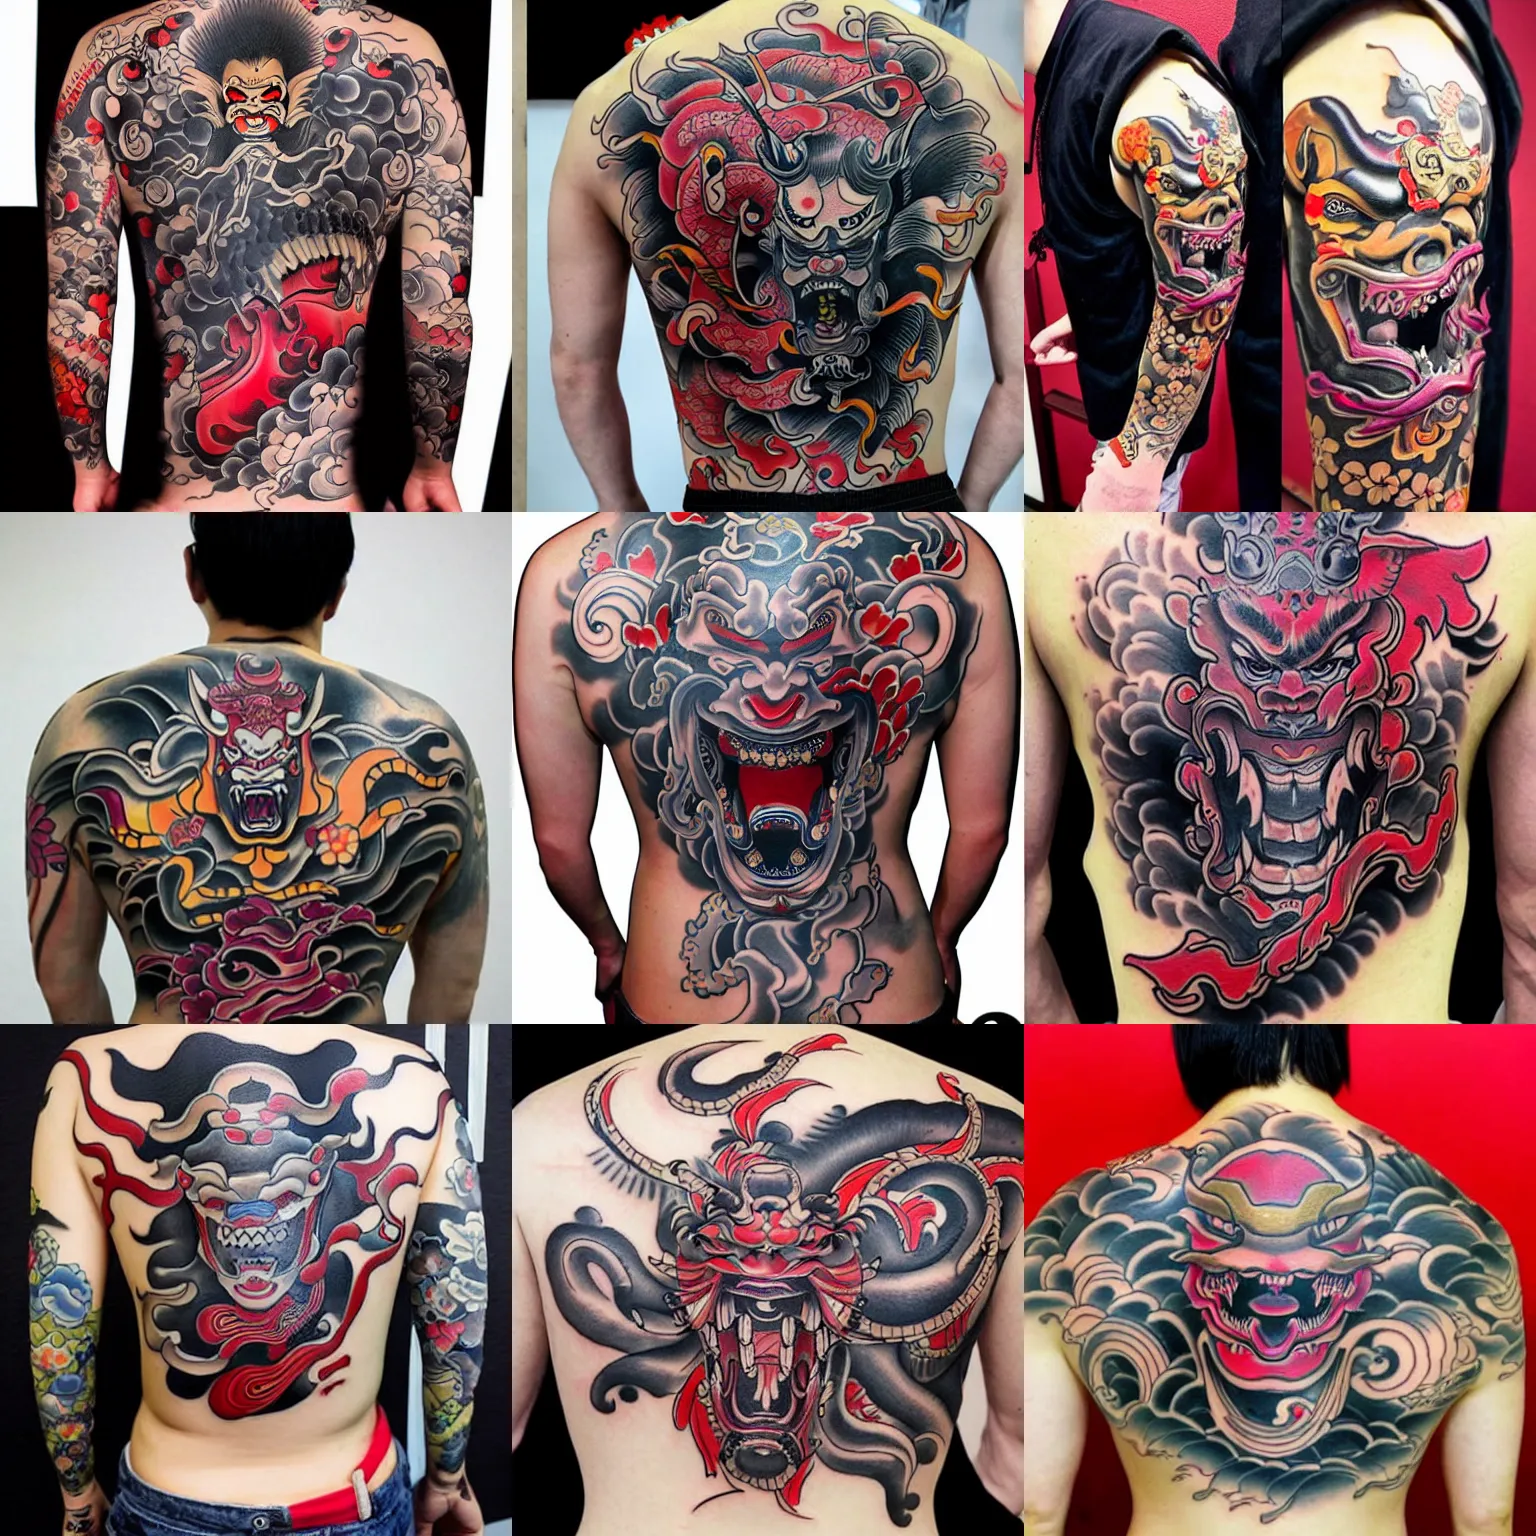 Raja Tattoo - 💀 Finally ✓ full back tattoo #tattoo #tattoos #tattooed  #skull #bigskull #skulltattoo #backskull #fullbacktattoo #backtattooskull  #fullbsckstattooskull #skullstattoo #dotwork #linework #shading #tatuiruote  #tatuiruotes #alytus ...